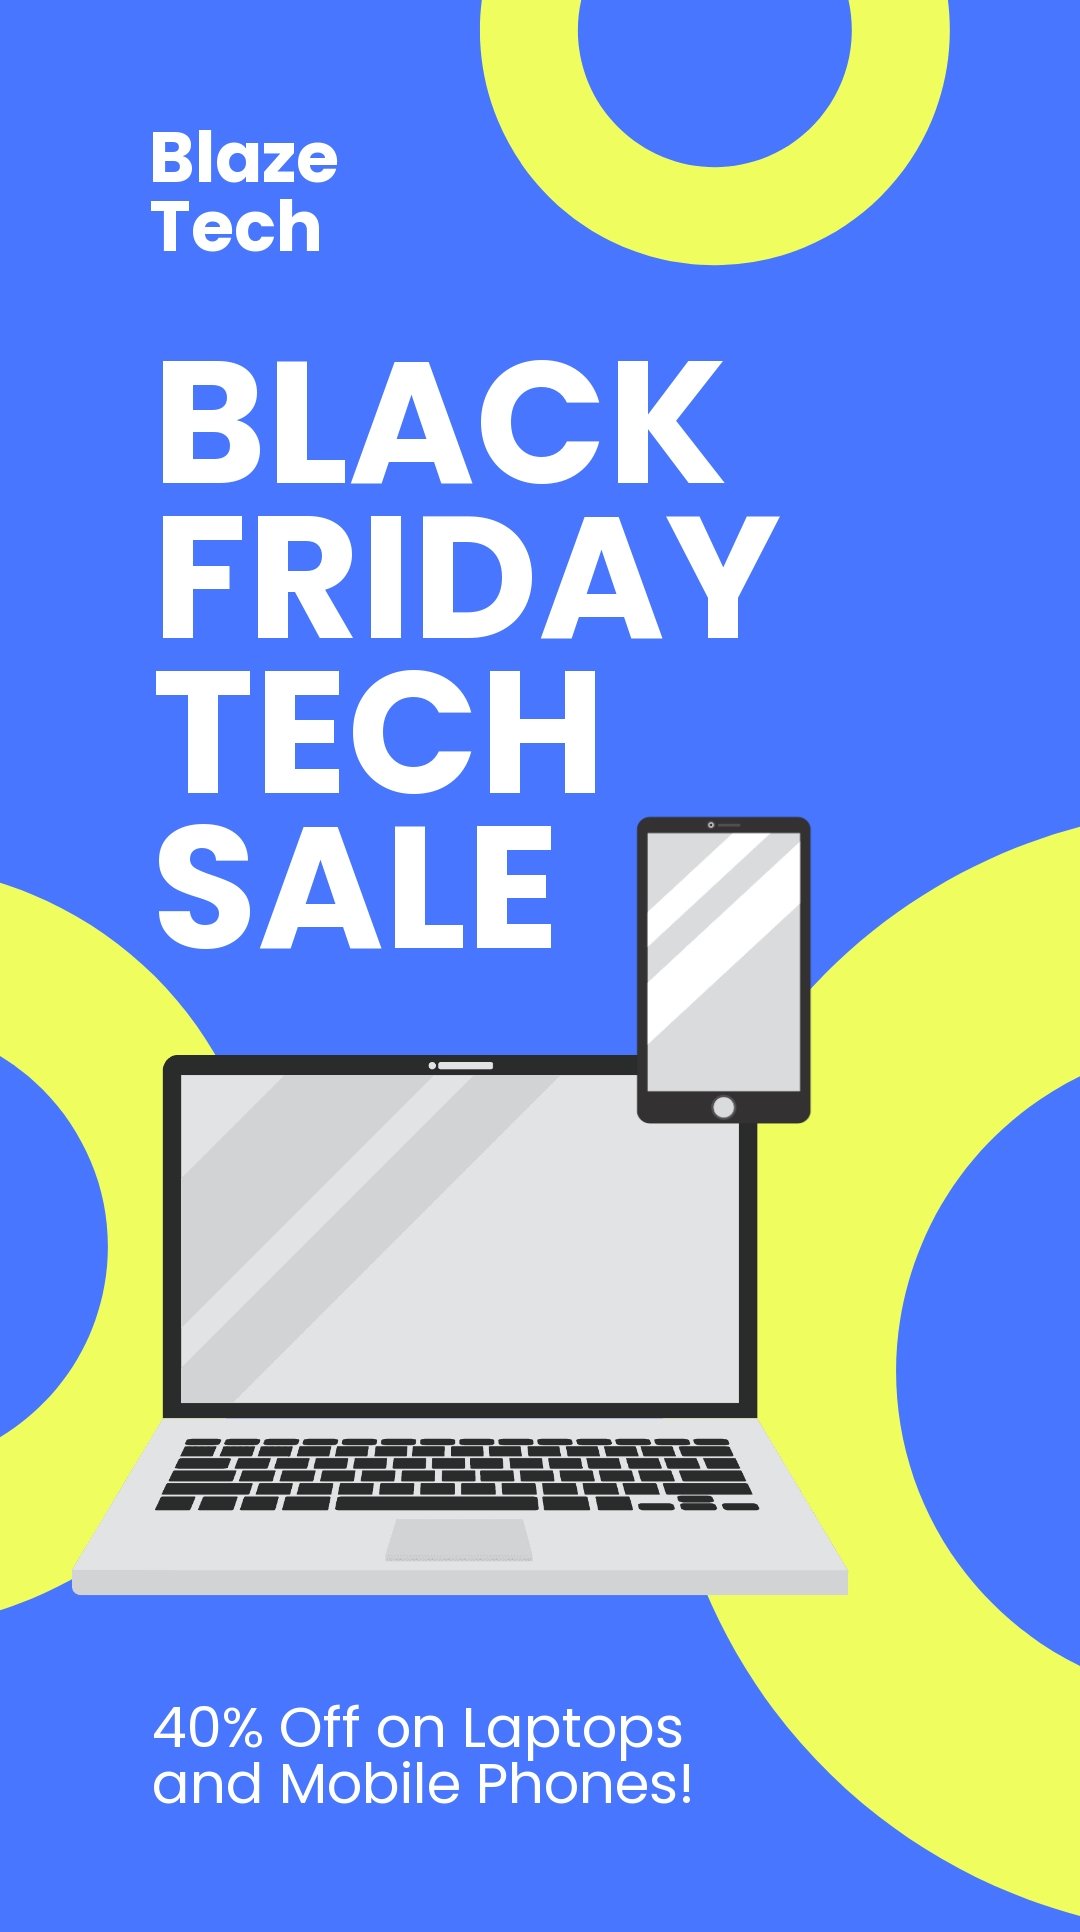 Black Friday Tech Sale Whatsapp Post